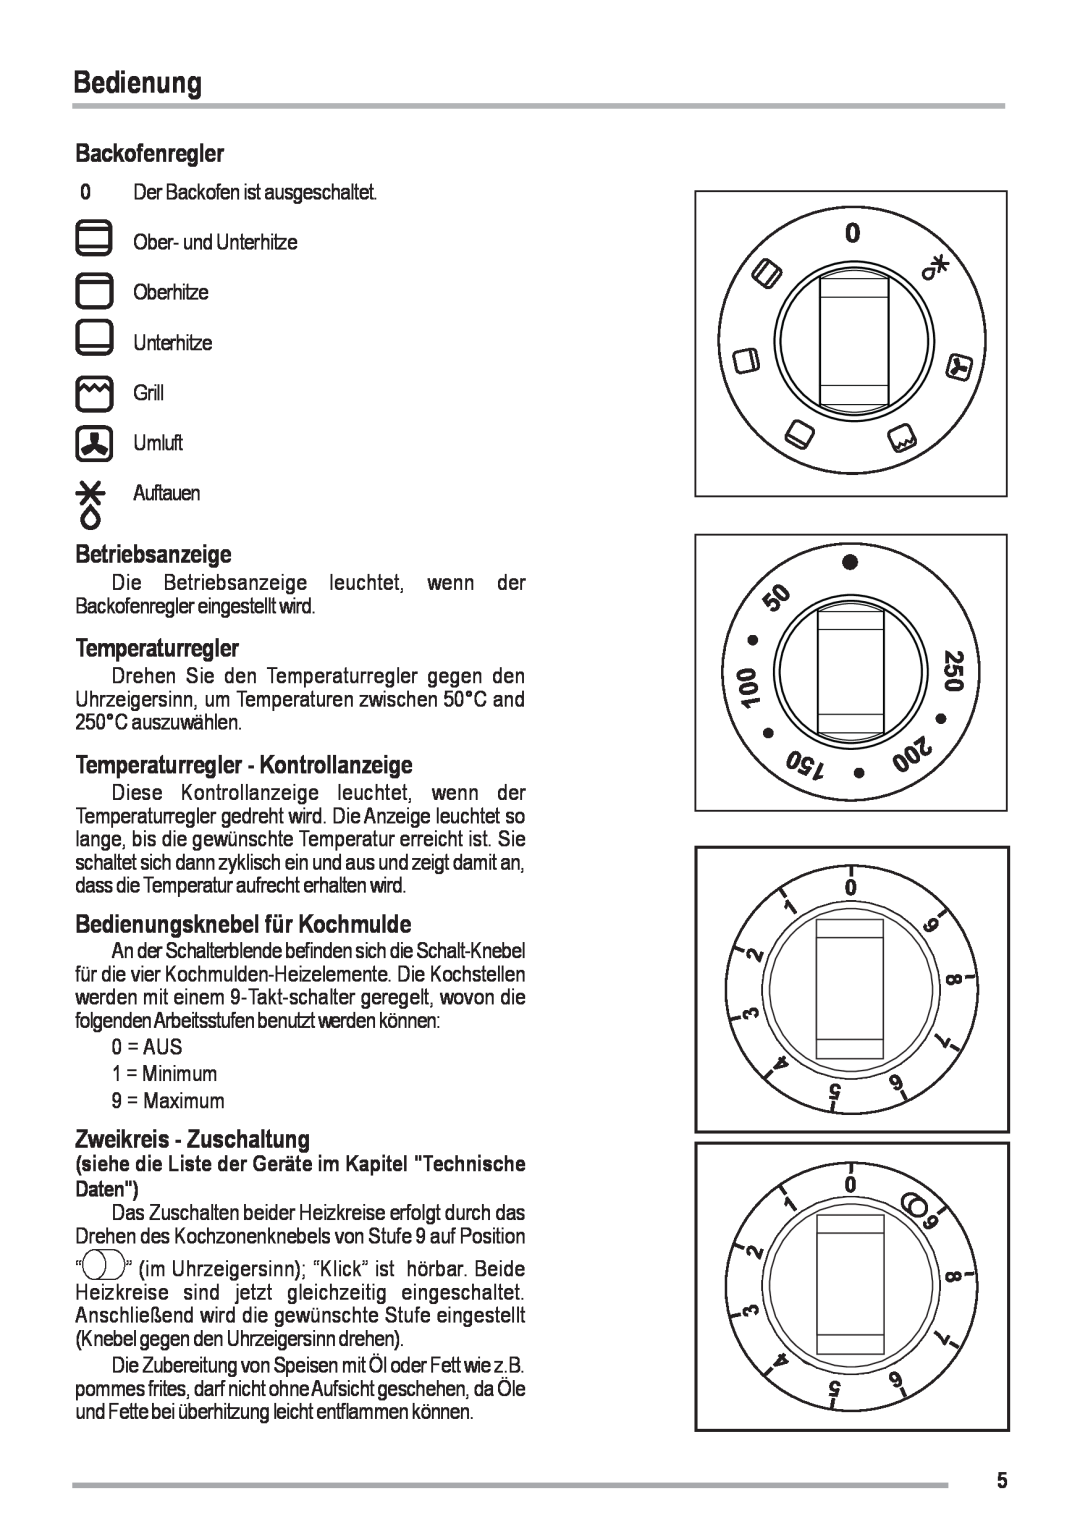 Zanussi ZOU 461 manual Bedienung, Backofenregler, Betriebsanzeige, Temperaturregler - Kontrollanzeige 